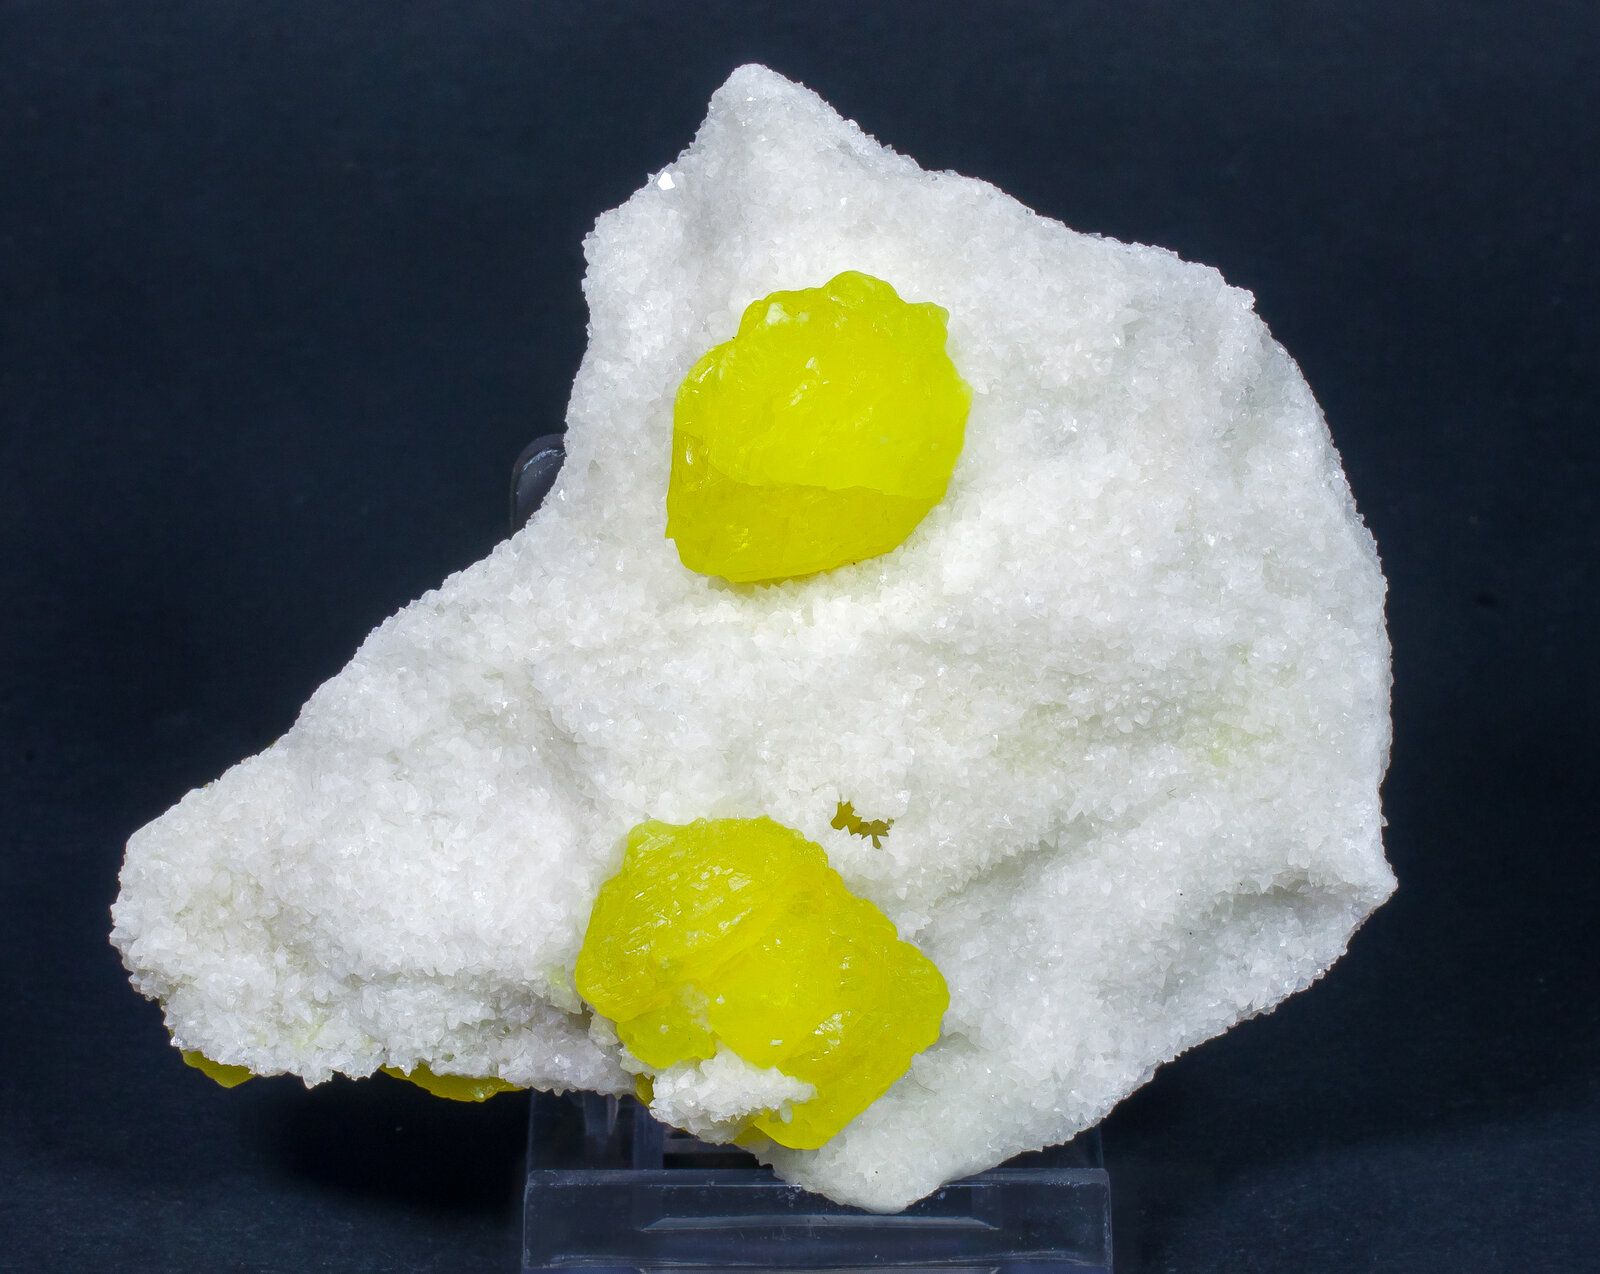 specimens/s_imagesAO5/Sulfur-NVX38AO5s.jpg